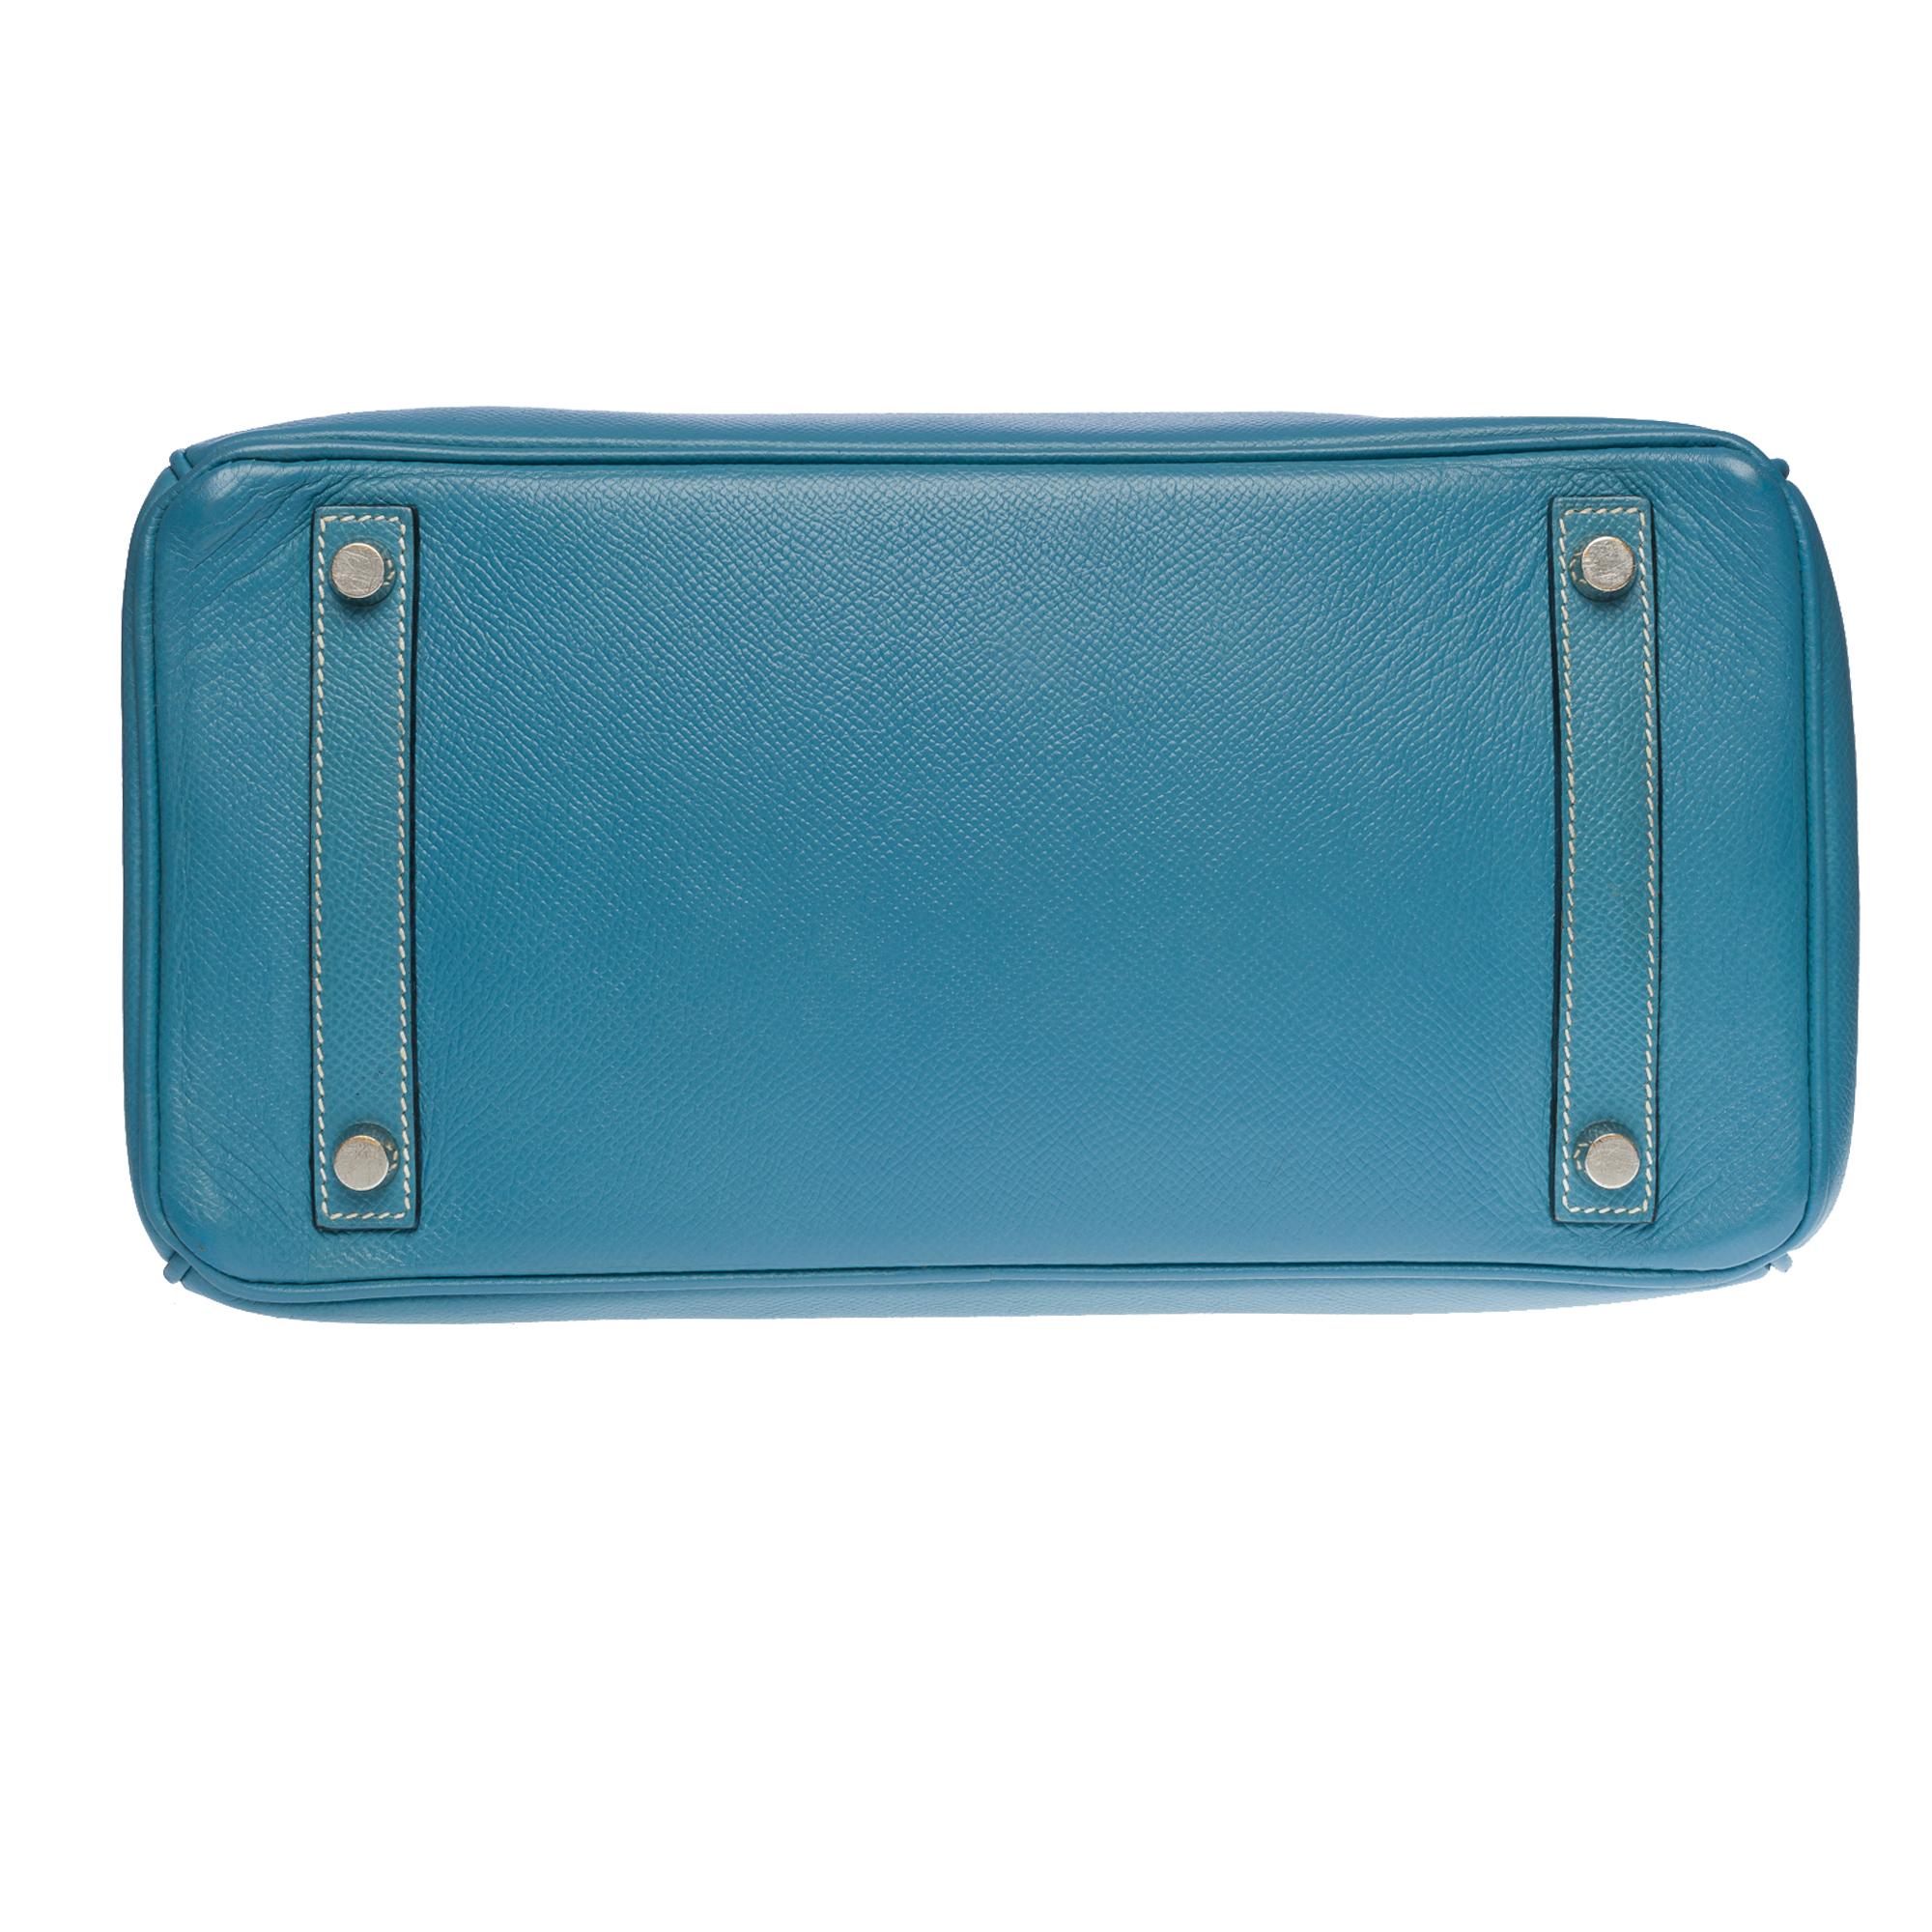 Stunning Hermès Birkin 30 handbag in Blue Jeans Epsom leather, SHW For Sale 5